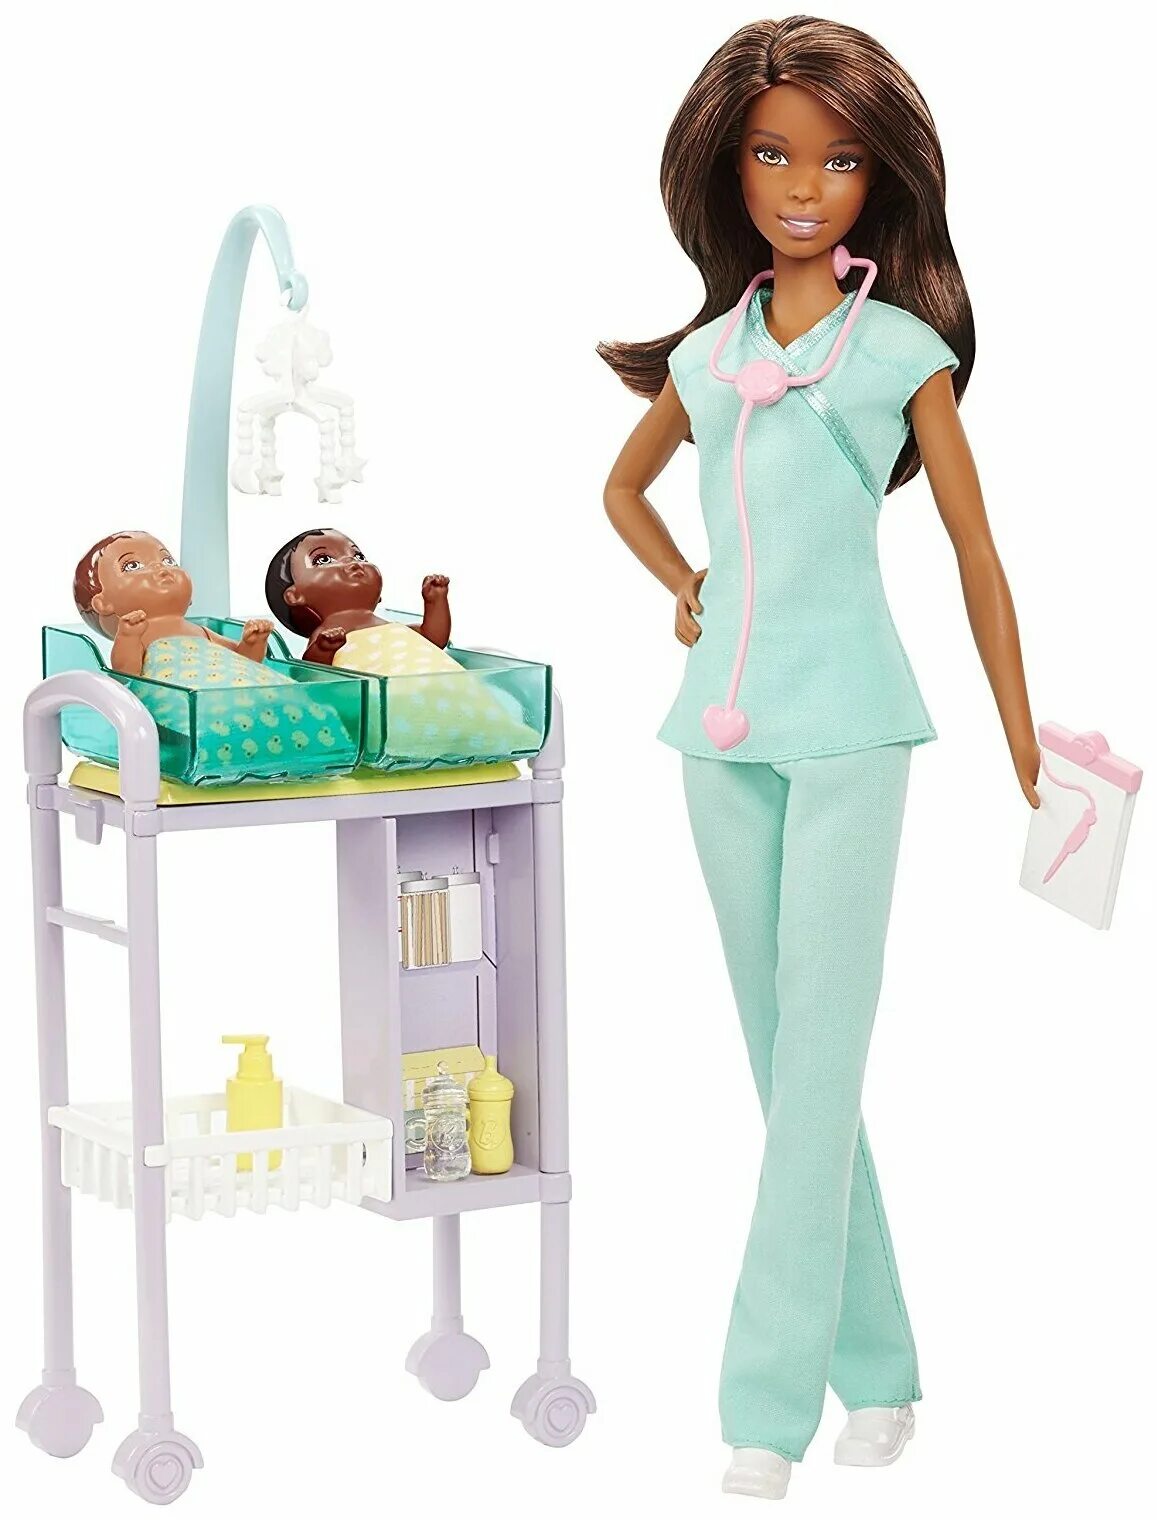 Купить куклу б у. Барби доктор доктор. Кукла Барби доктор детский мир. Кукла Барби врач педиатр. Куклы Барби профессии доктор.